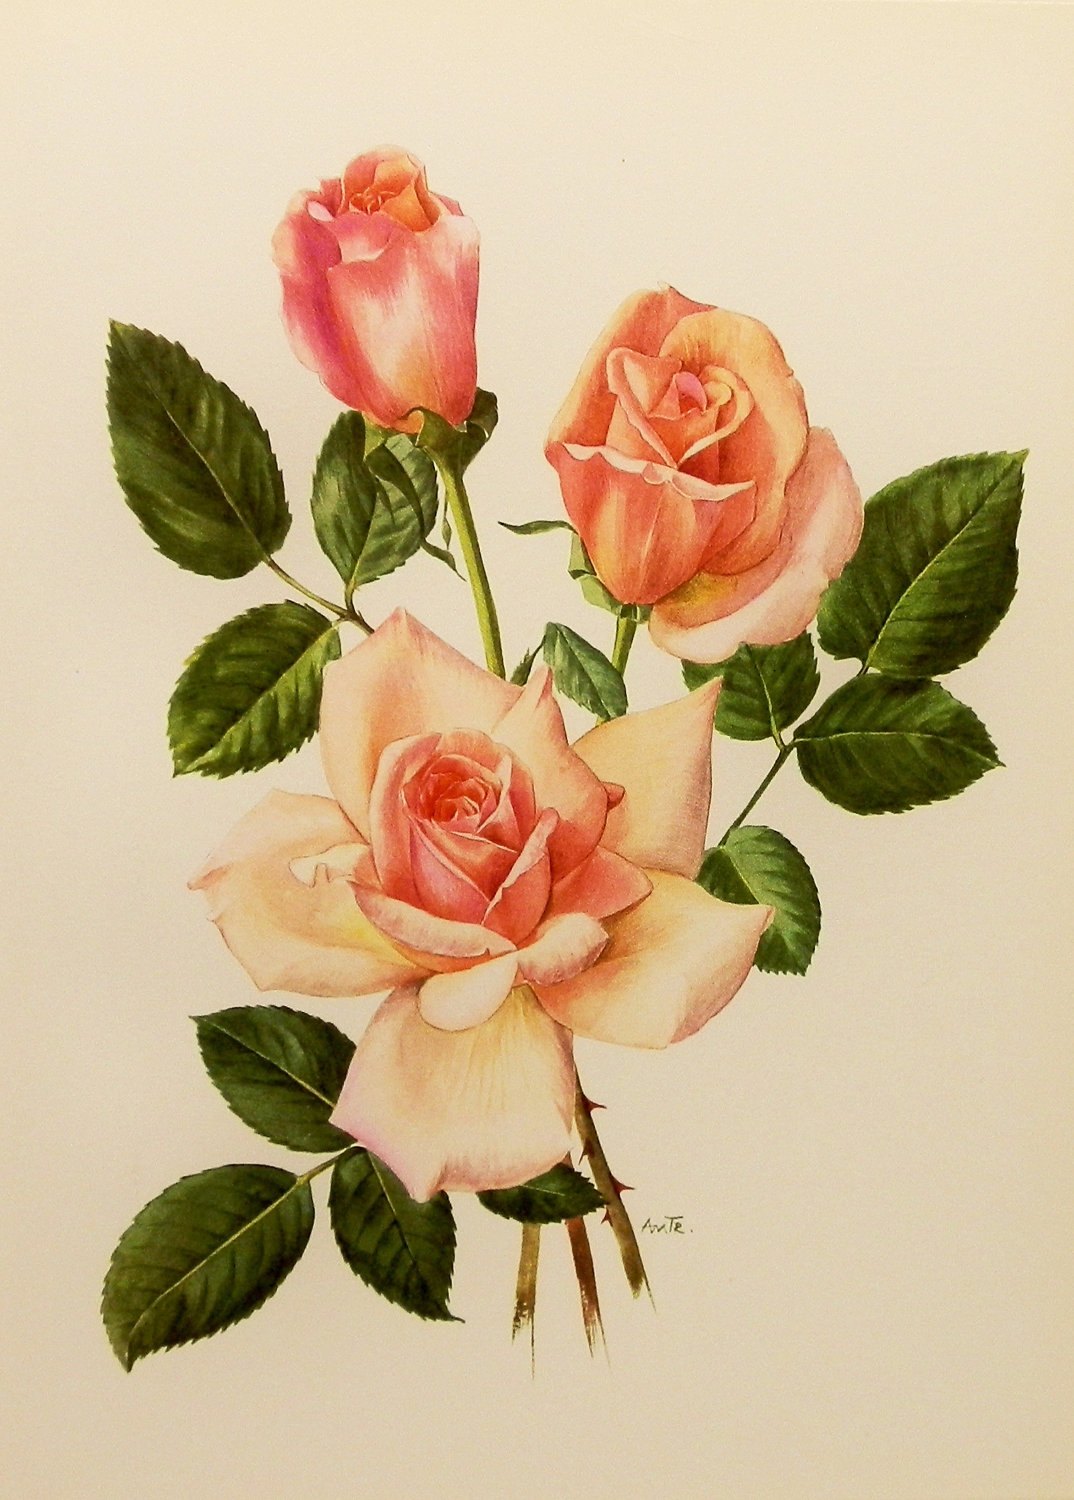 Rose Botanical Drawing at GetDrawings | Free download